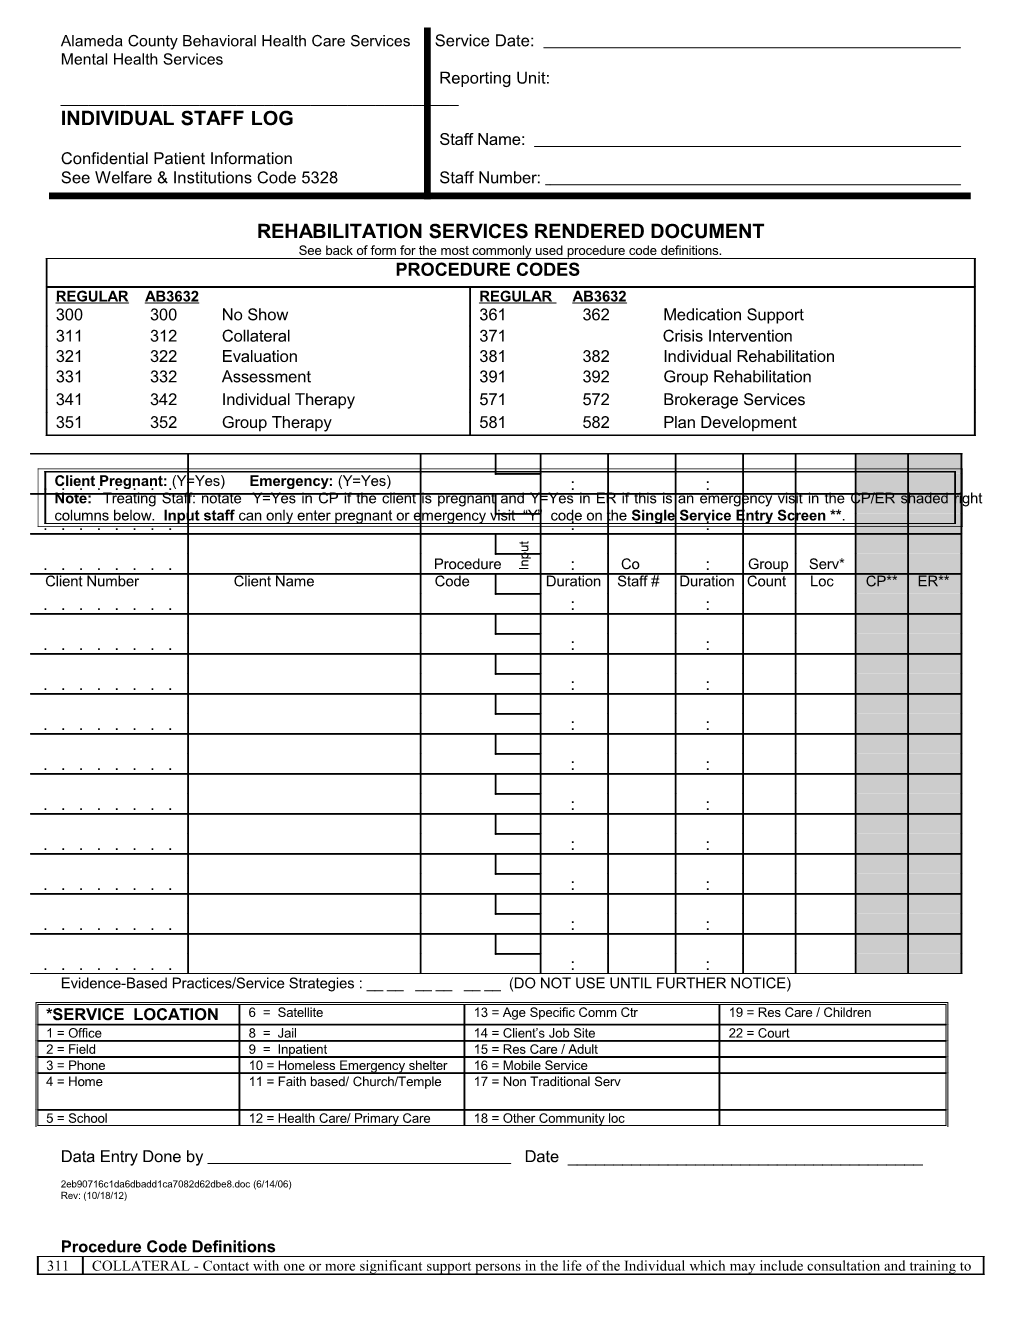 Alameda County Behavioral Health Care Data Entry Initials